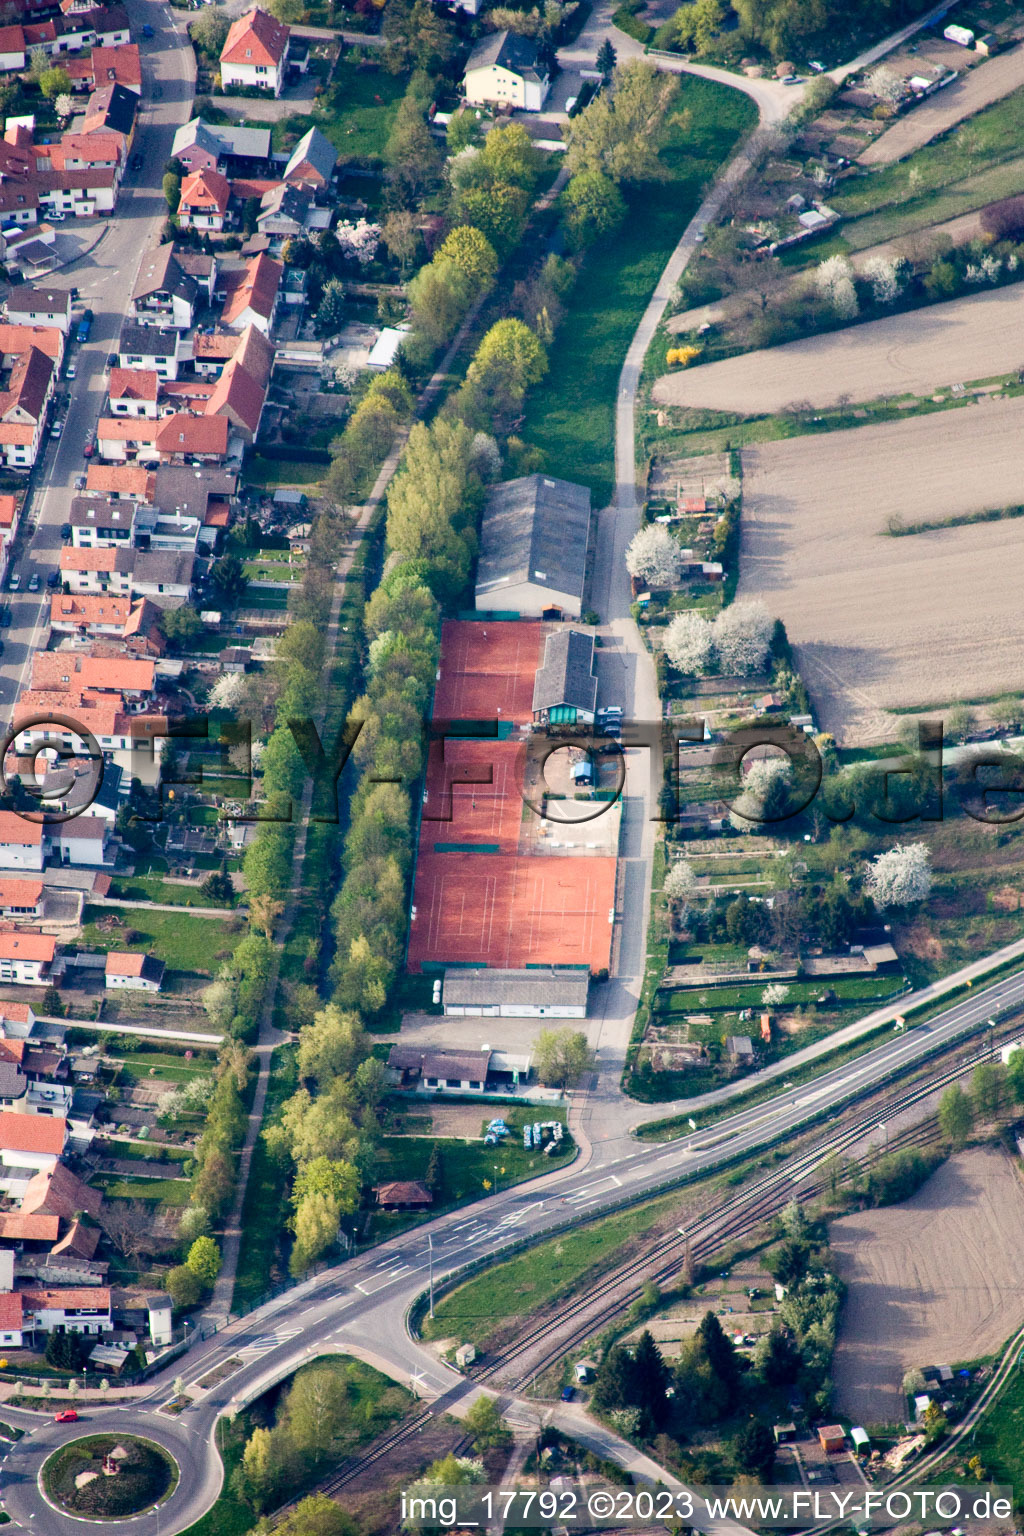 Drone recording of Neuburg in the state Rhineland-Palatinate, Germany